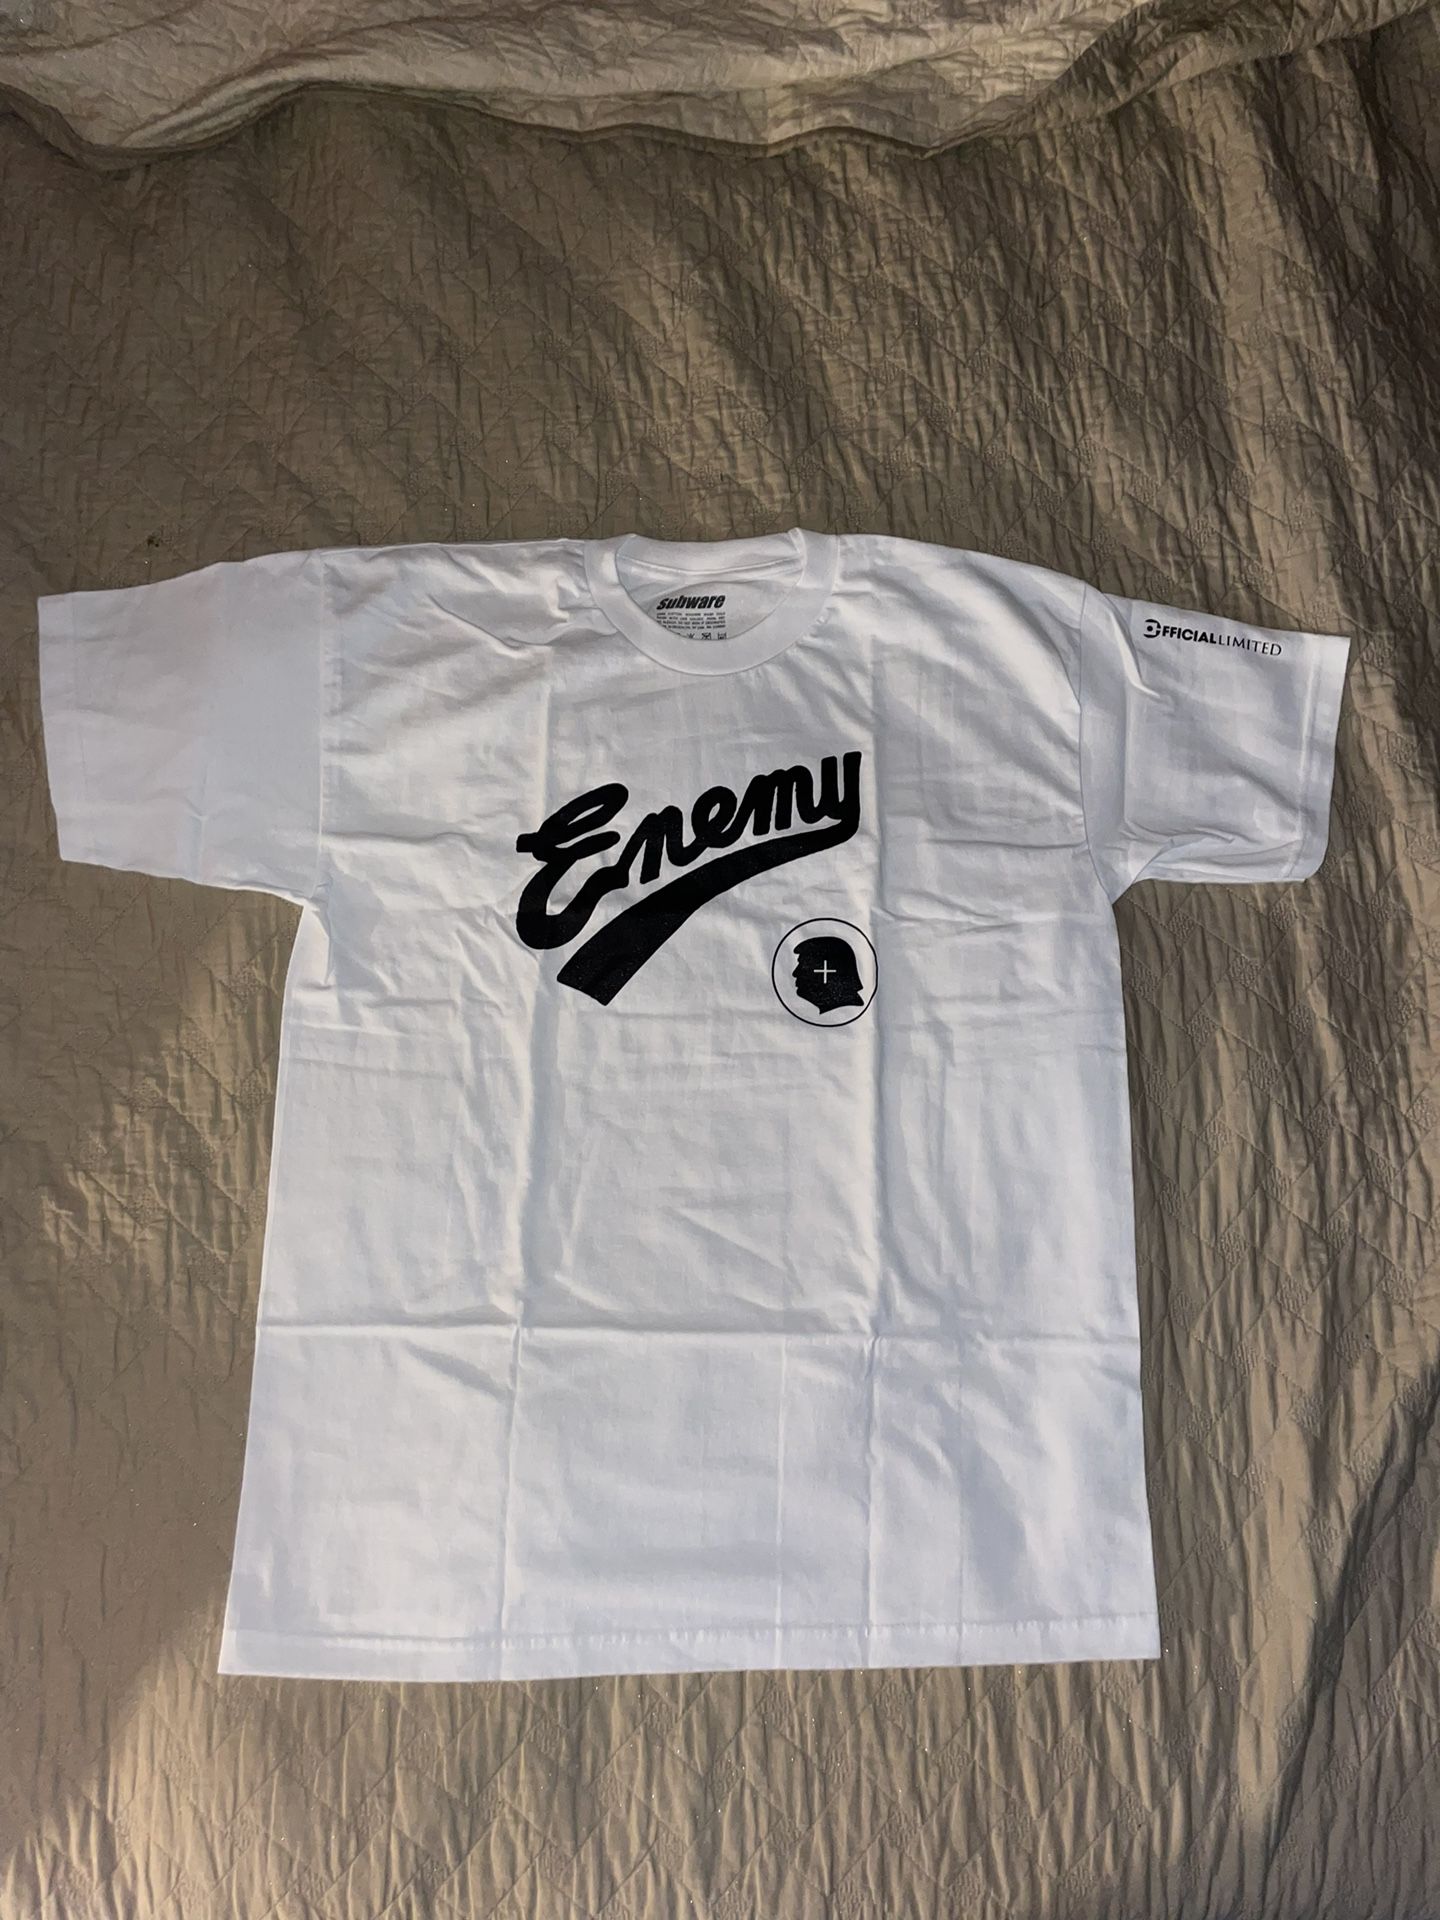 Subware “Enemy” Shirt Size XL